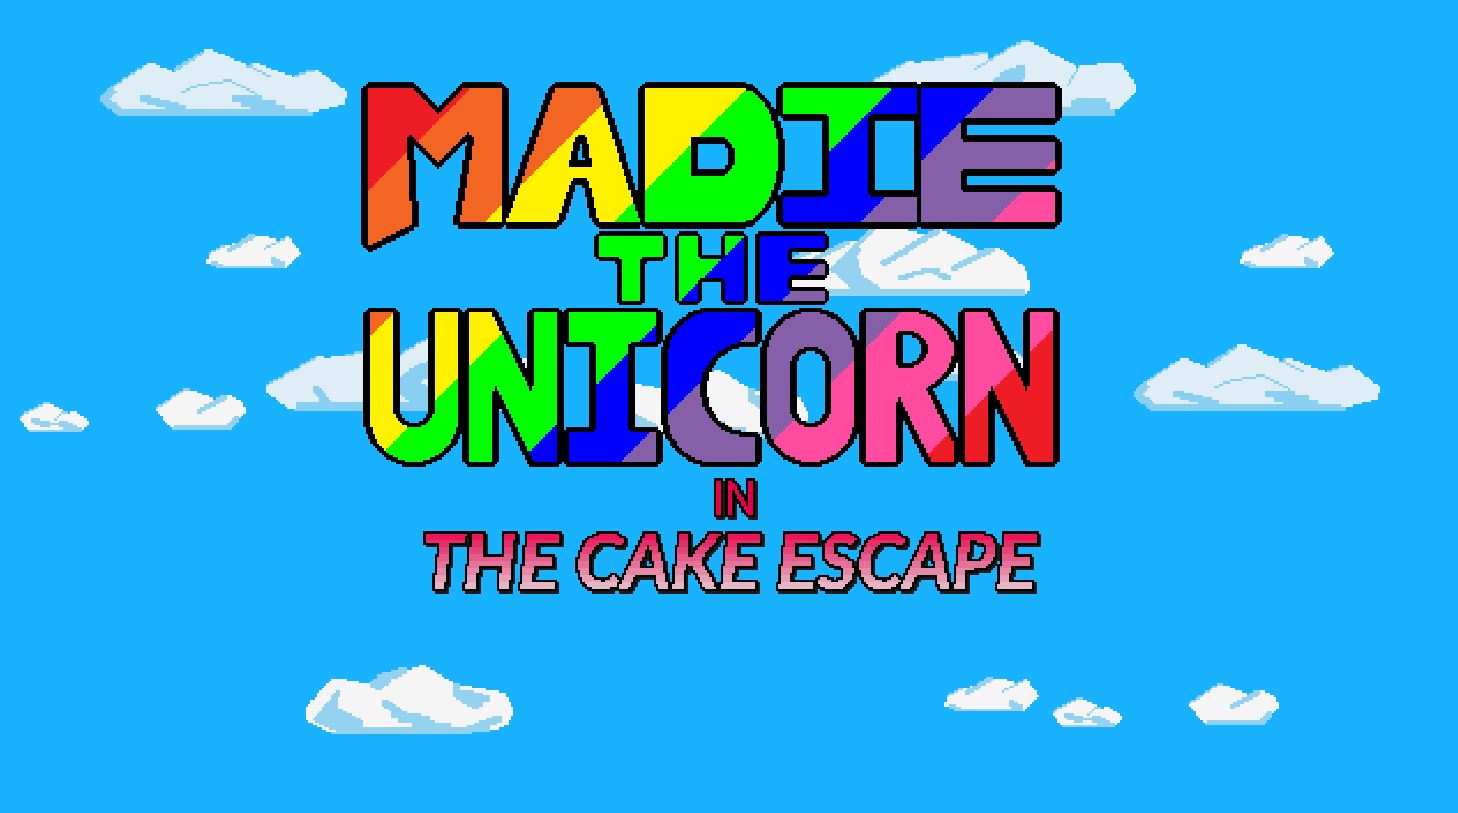 Madie The Unicorn in The Cake Escape